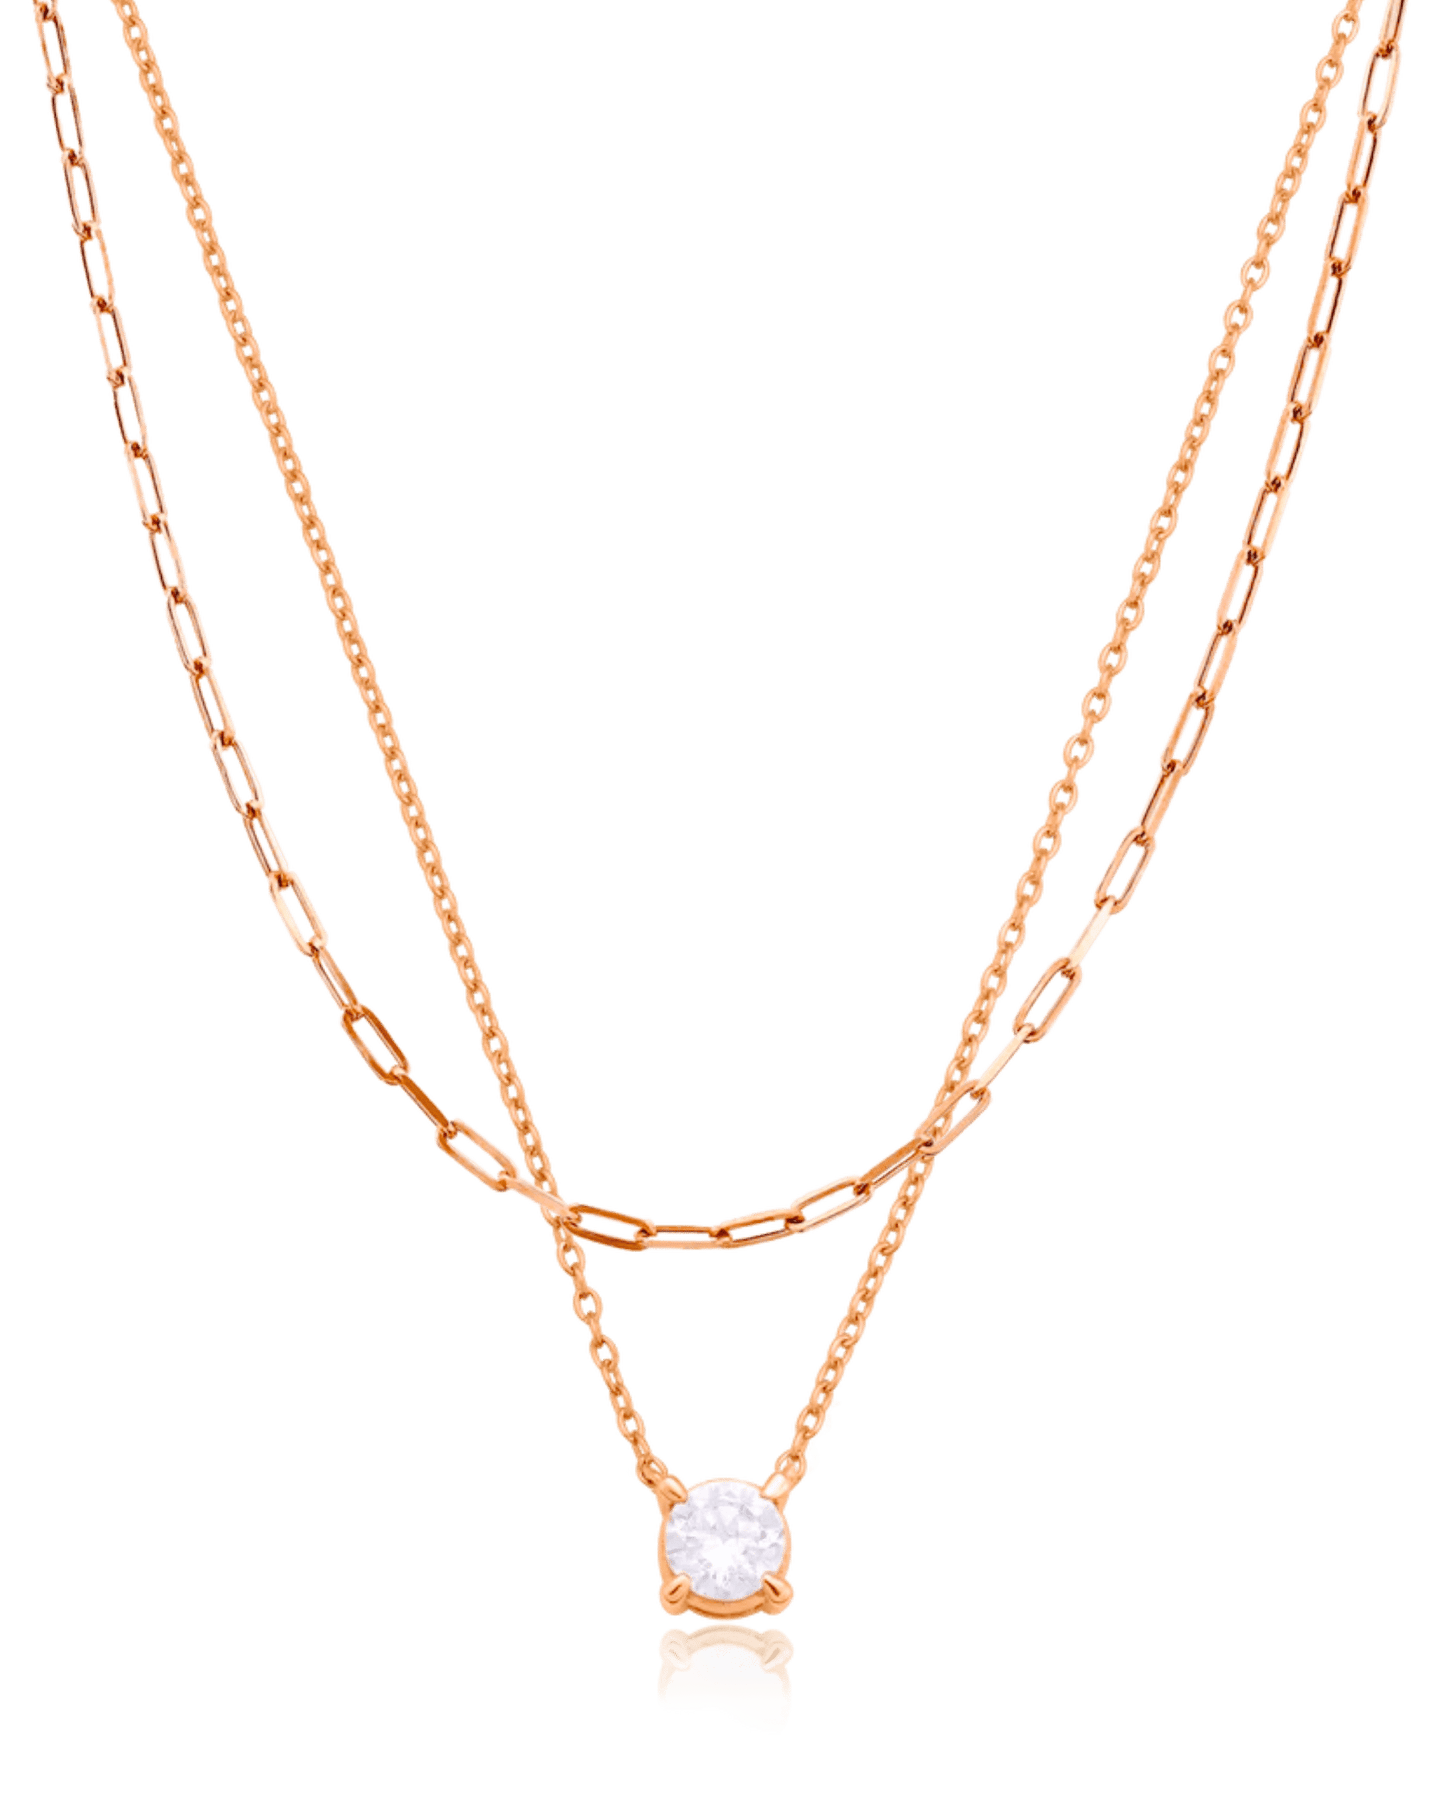 Set of Round Solitaire Diamond & Links Chain Necklaces - 18K Rose Vermeil Necklaces magal-dev 0.10 CT 